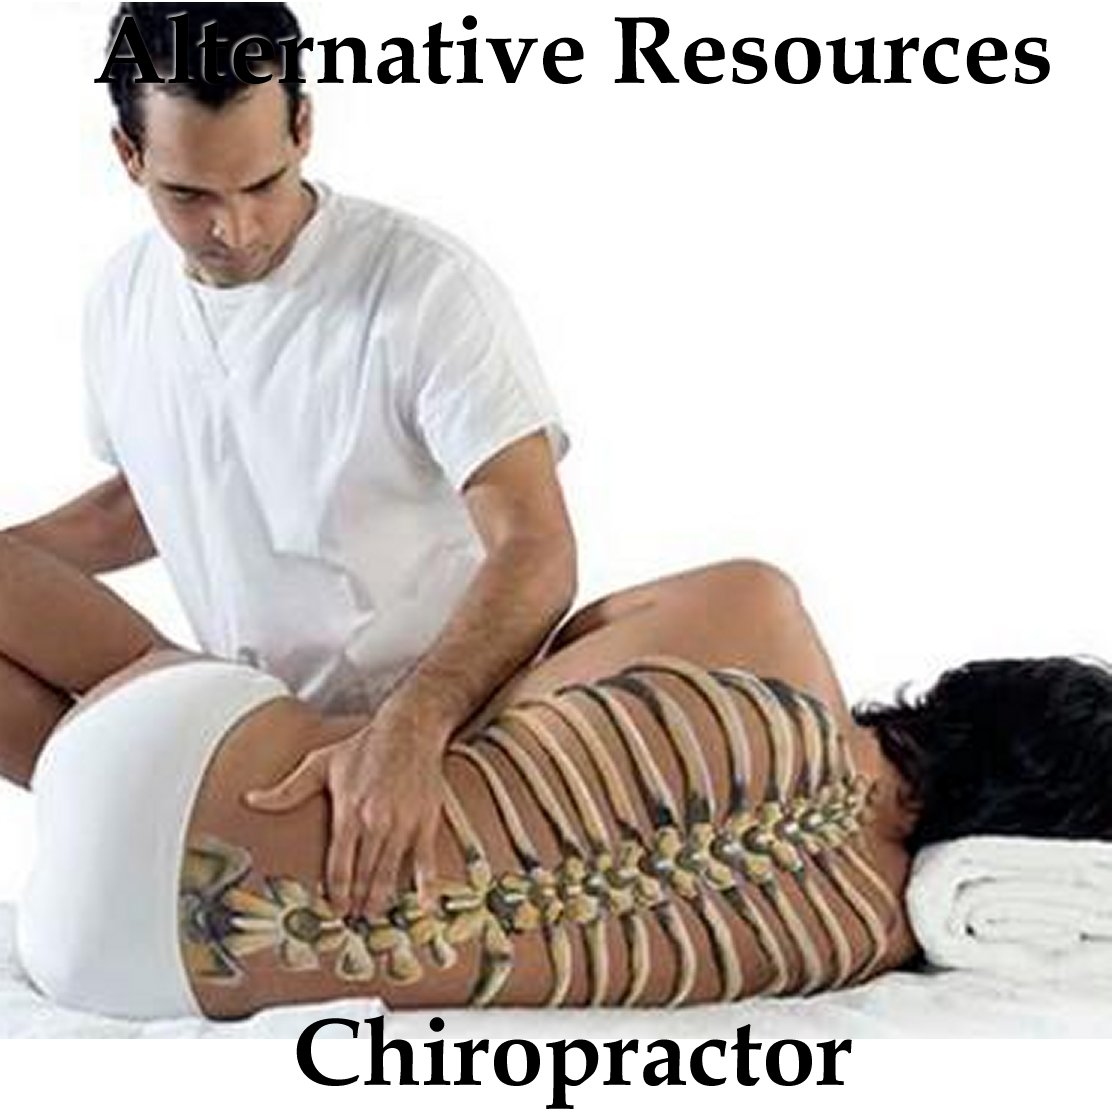 Chiropractor Alternative Resources Directory